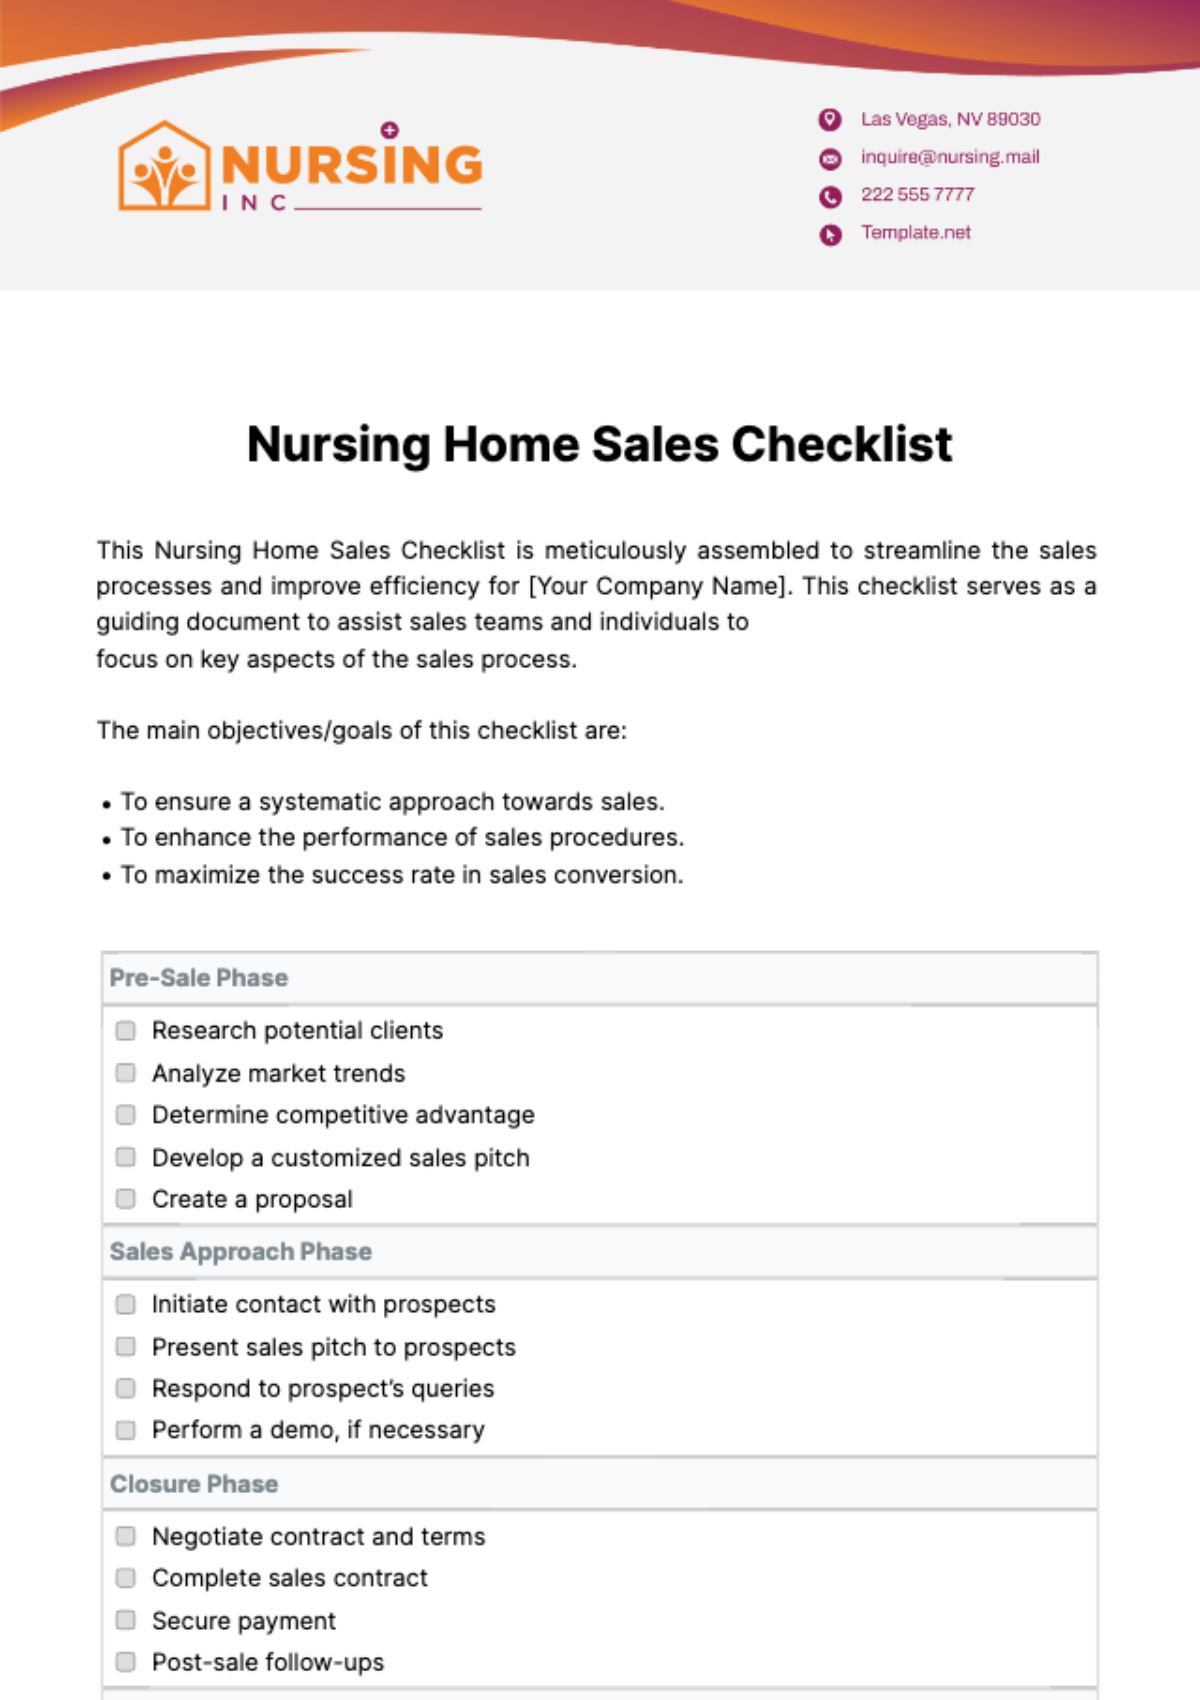 Nursing Home Sales Checklist Template